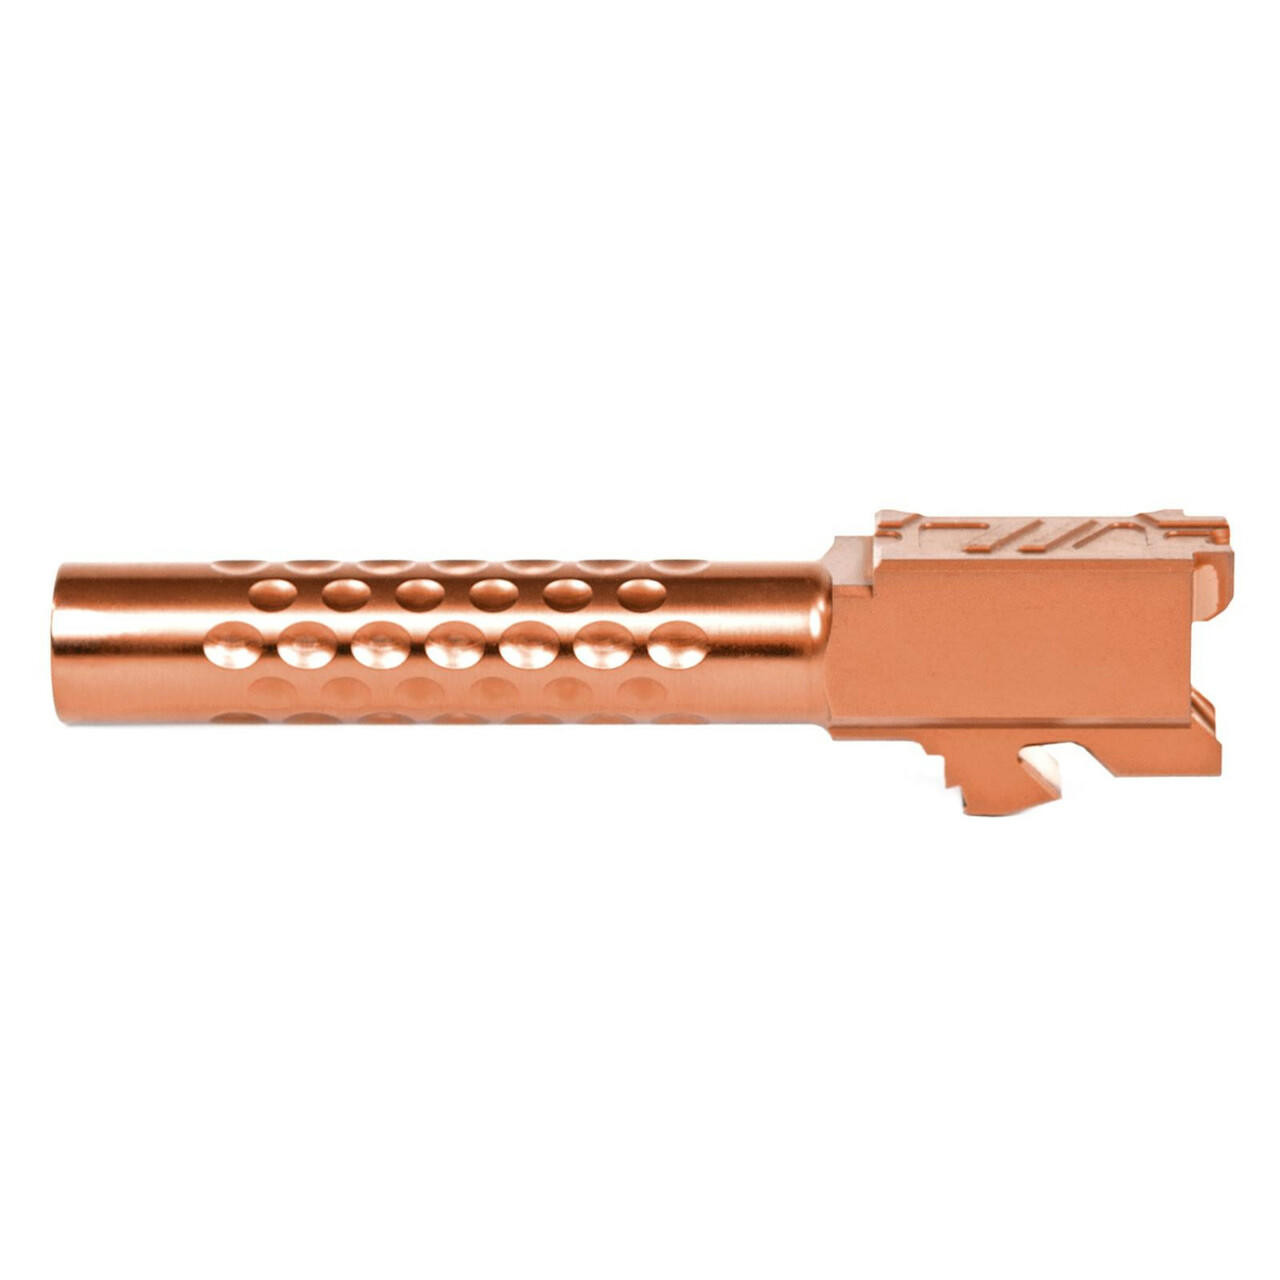 ZEV ZEV Optimized Match Barrel For Glock 19, Gen1-5, Bronze